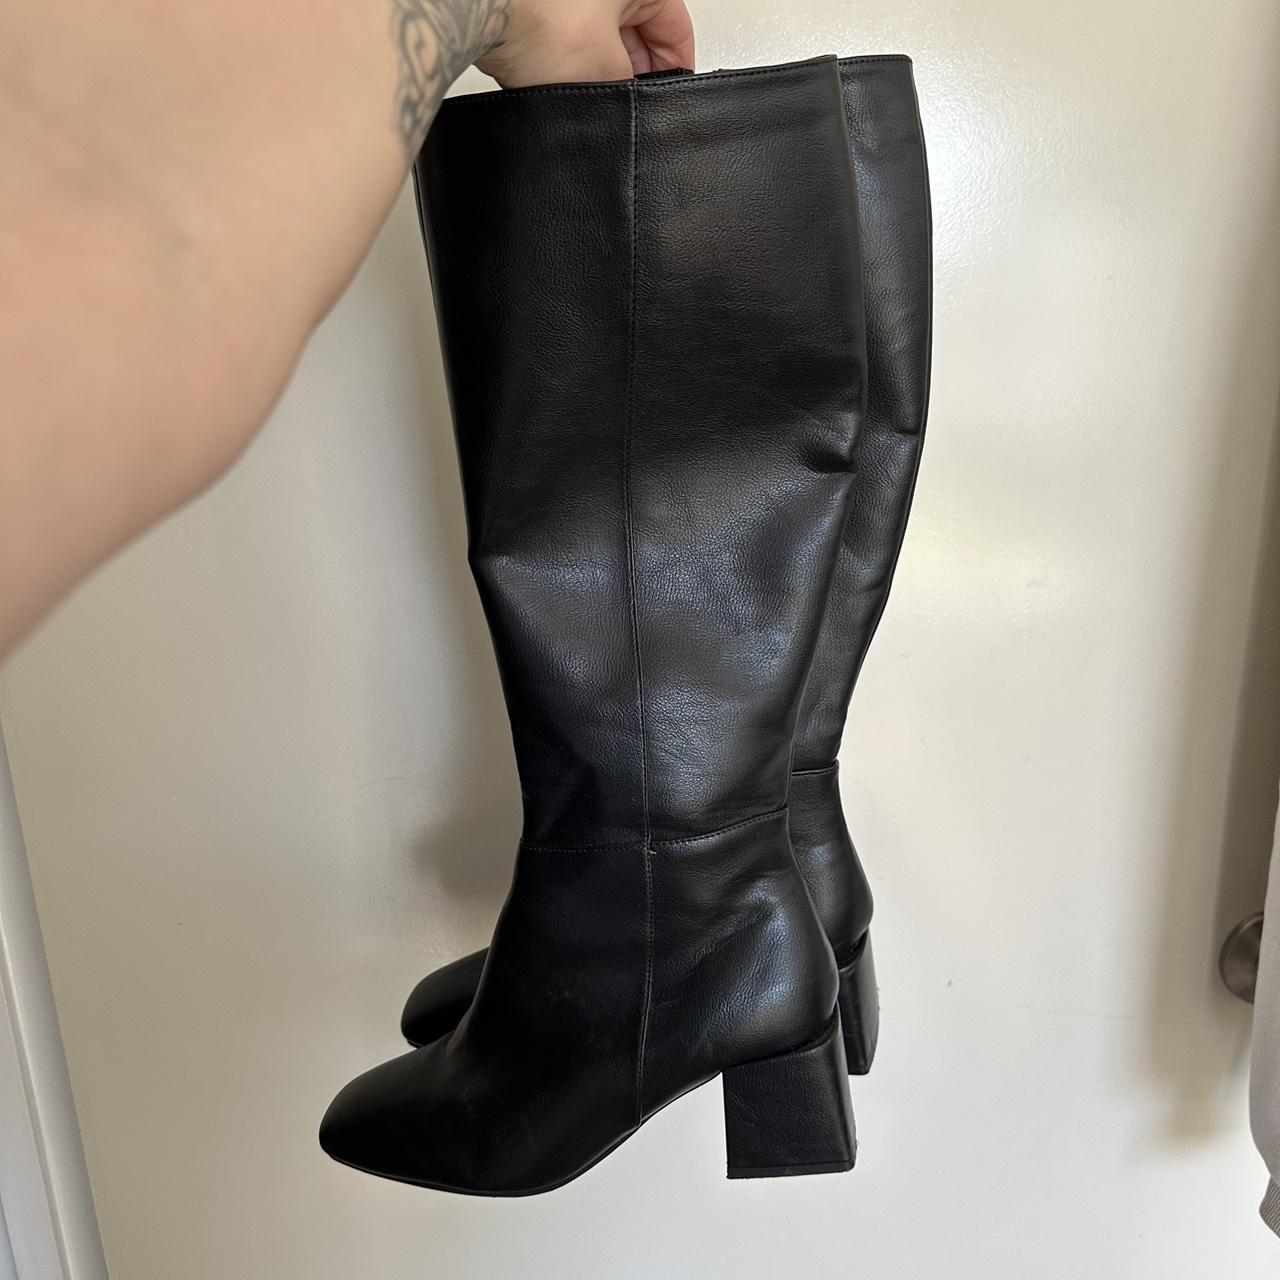 Ravella Black knee high boots - Depop